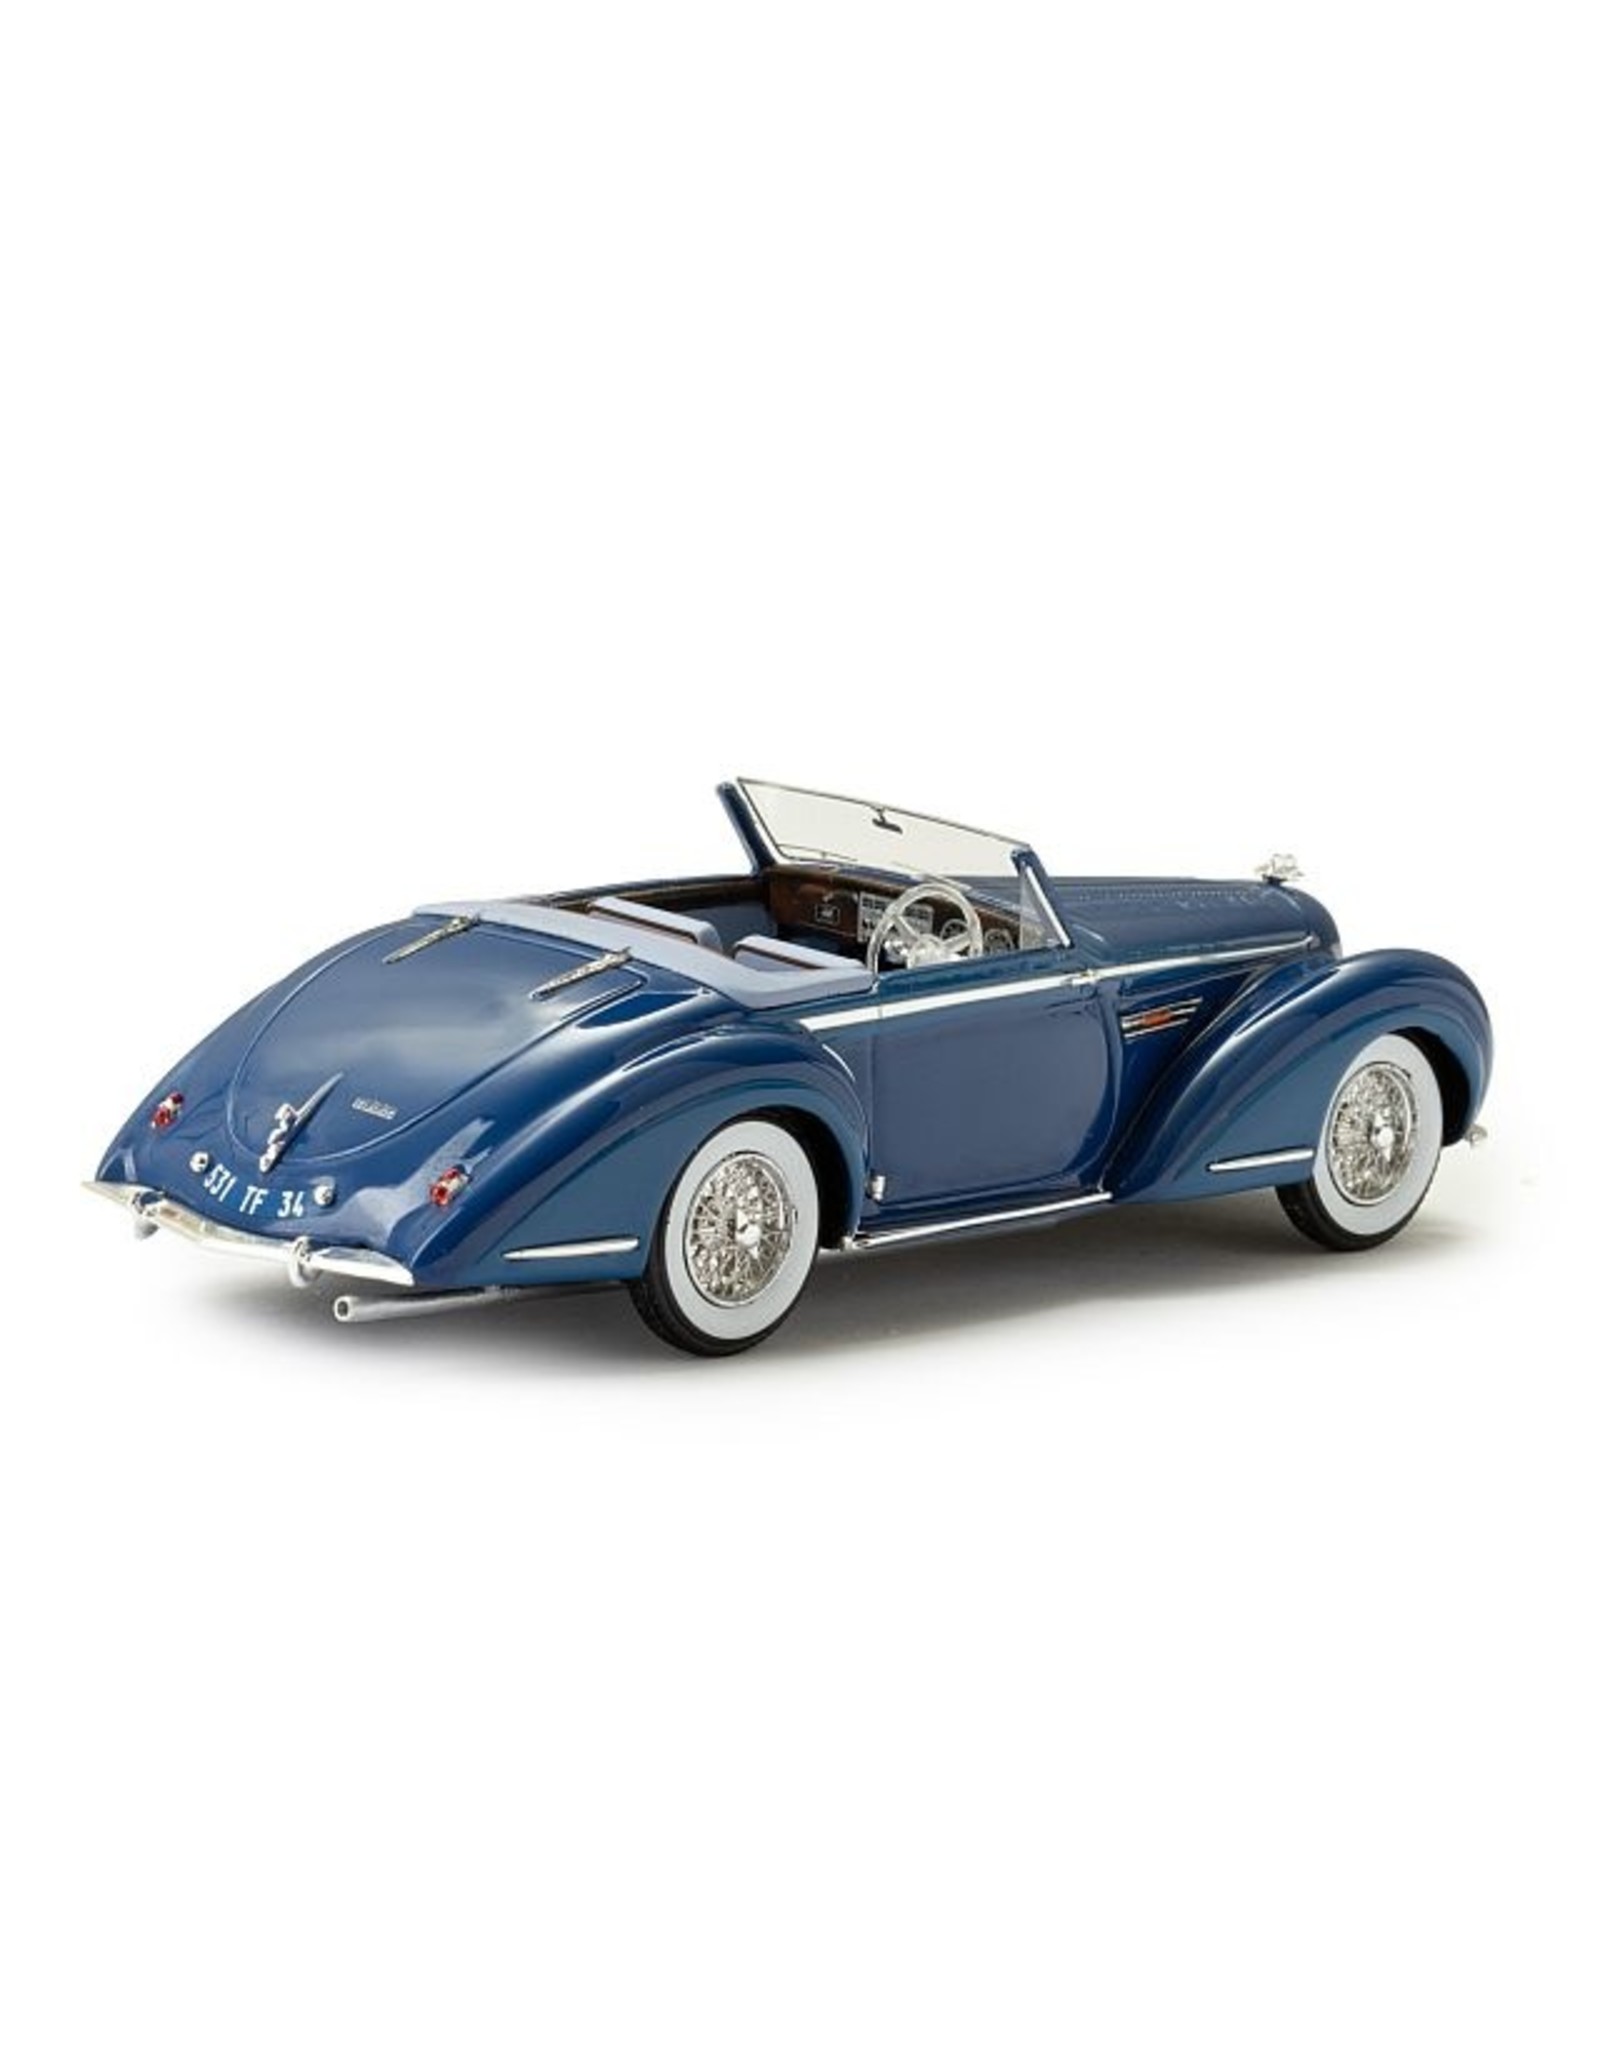 Delahaye by Chapron Delahaye 135 MS Henri Chapron(cabriolet)1947(open)2 tones blue